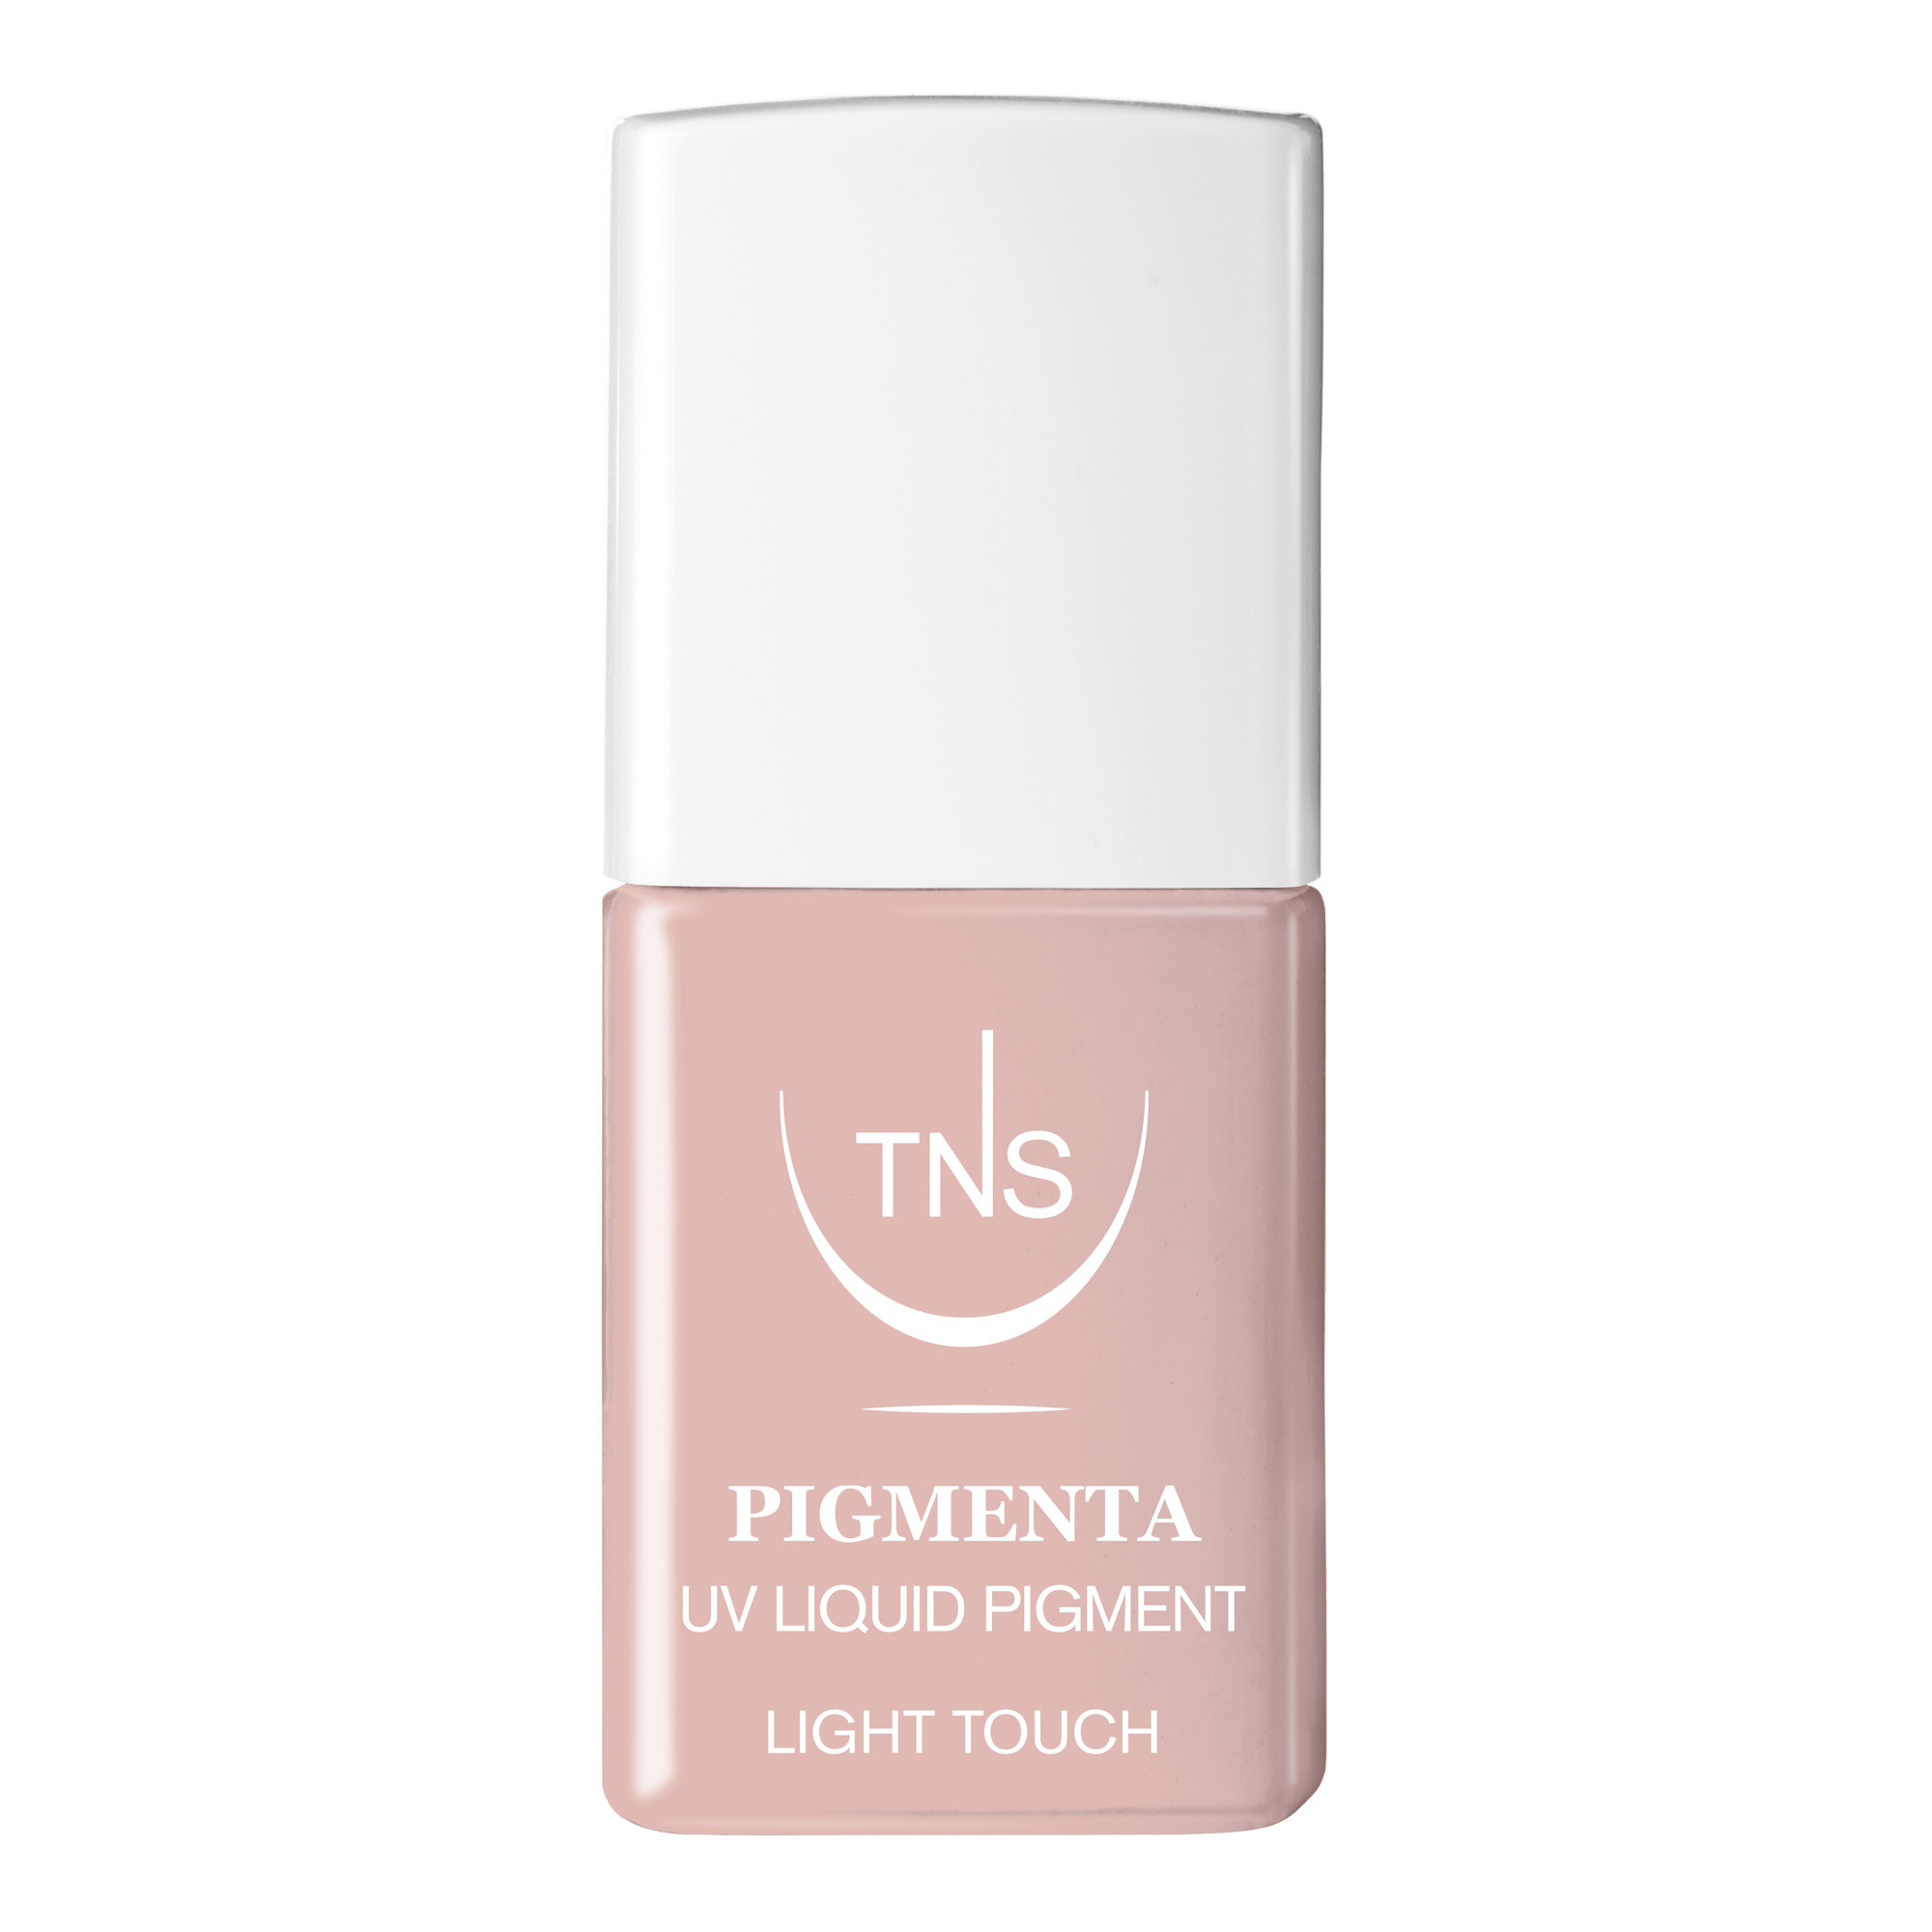 UV Liquid Pigment Light Touch light pink 10 ml Pigmenta TNS